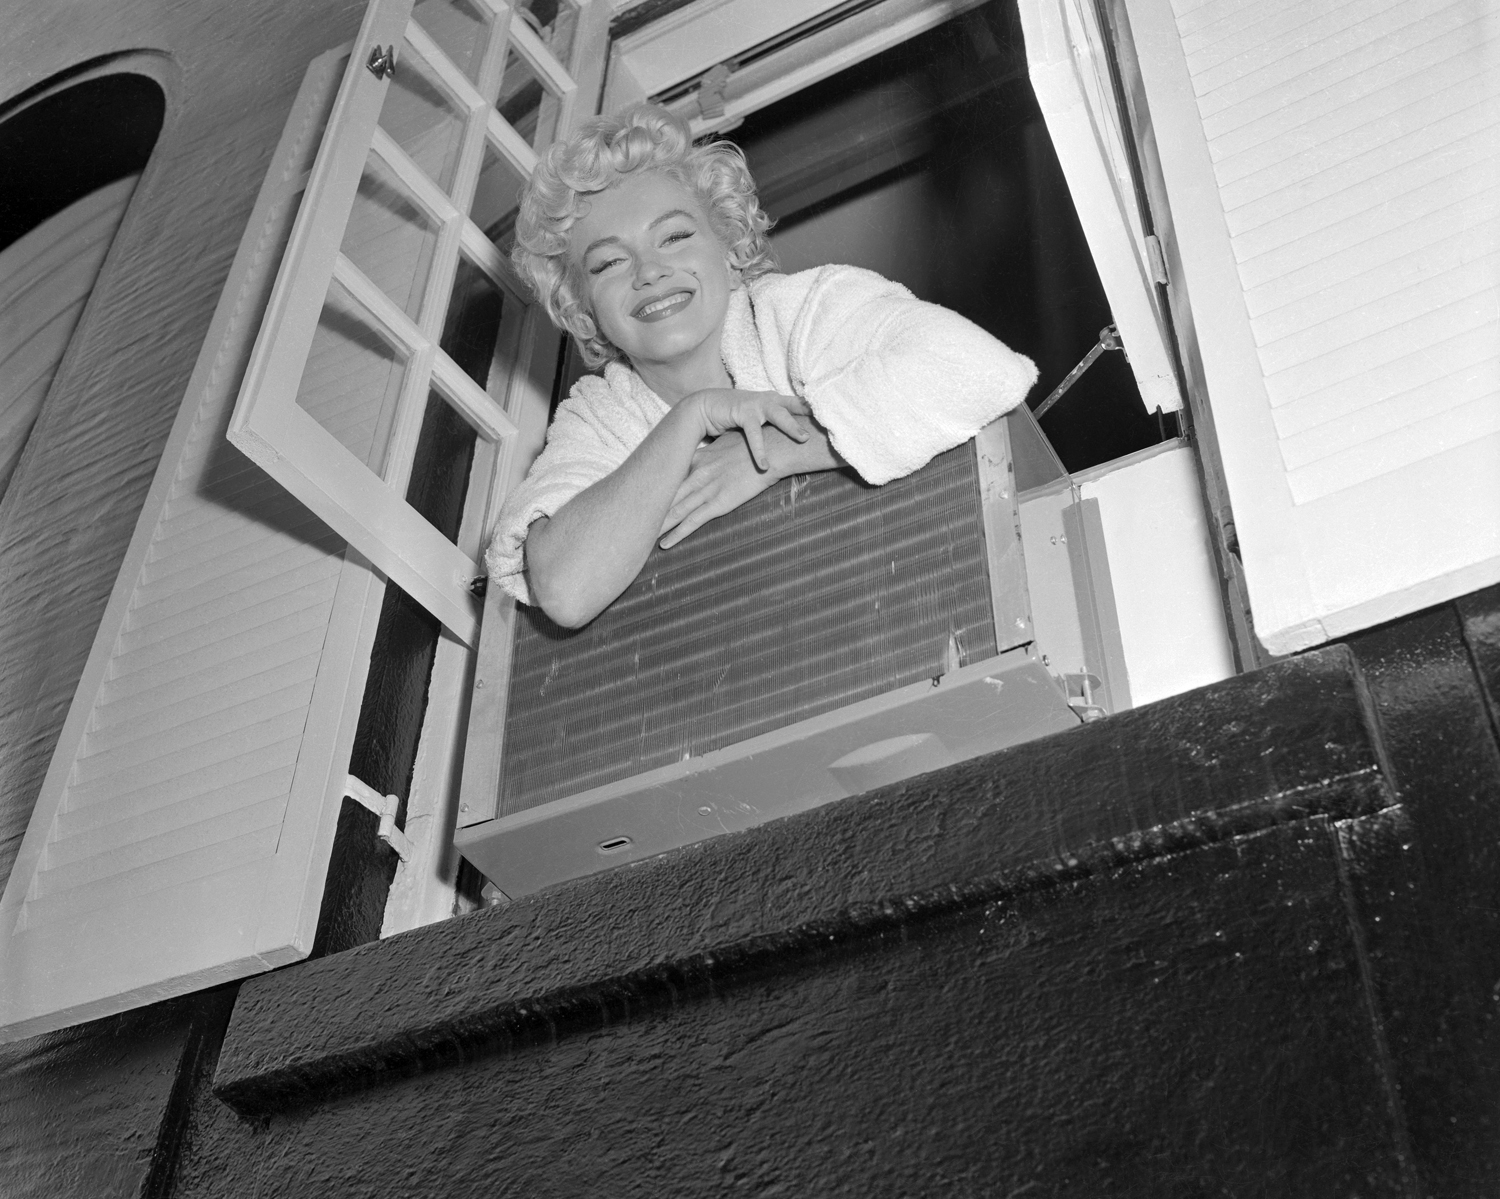 Monroe signs a photo of herself, circa 1955.